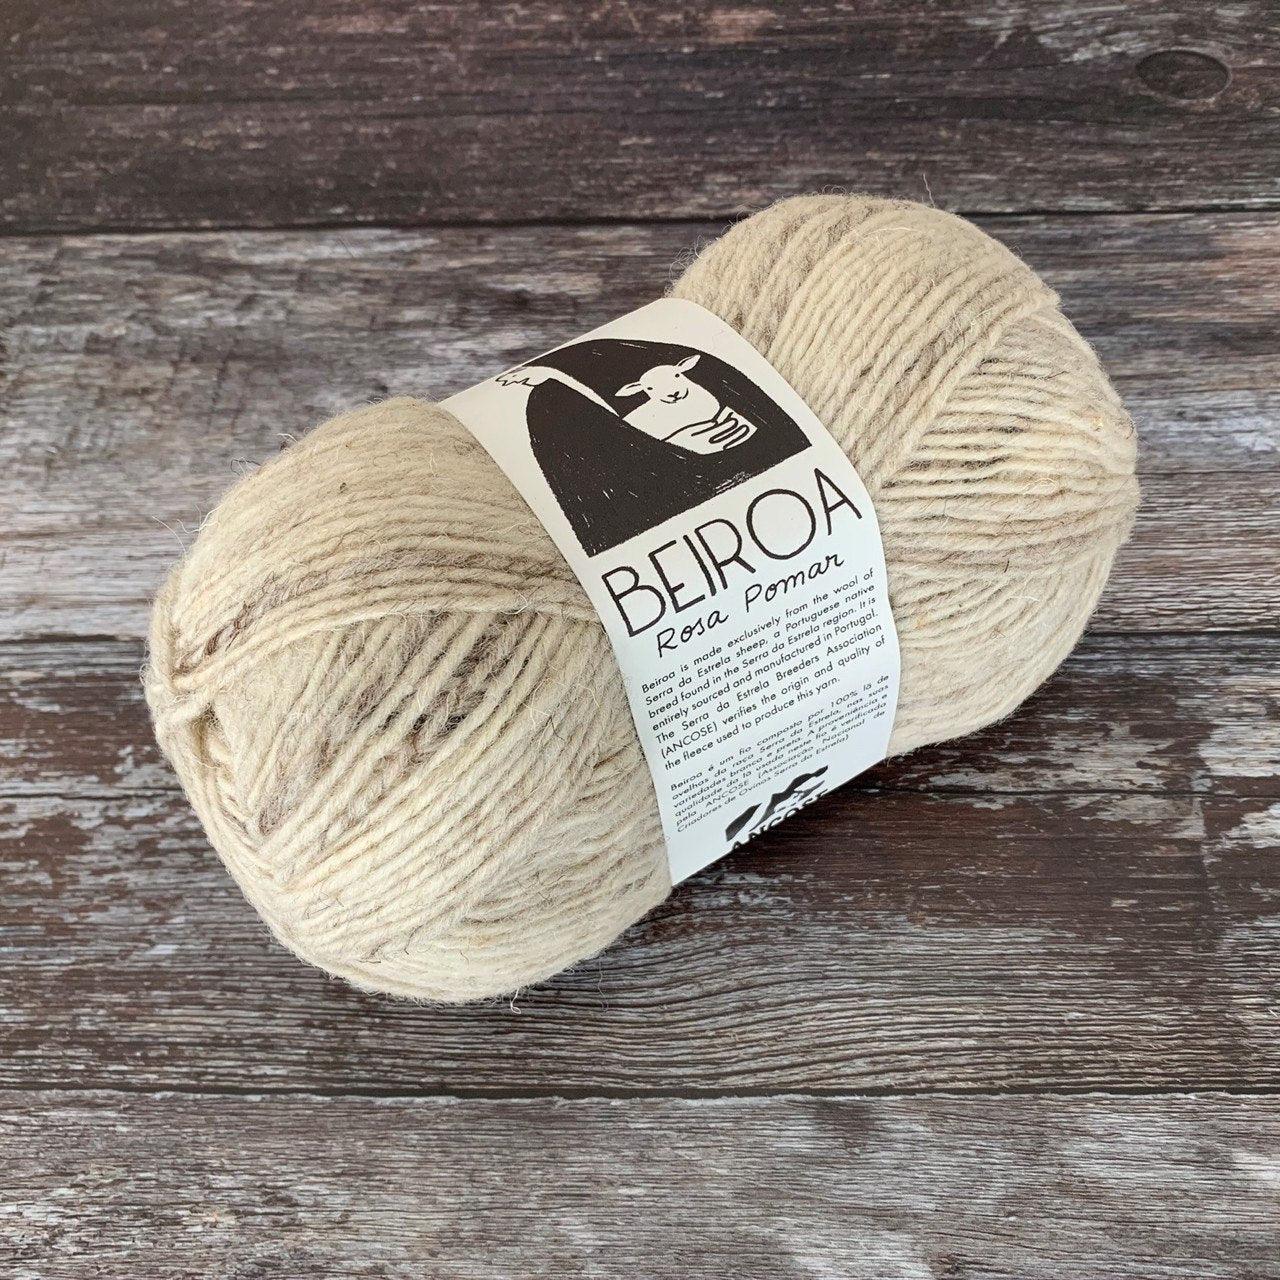 Retrosaria Retrosaria Beiroa -  - Worsted Knitting Yarn